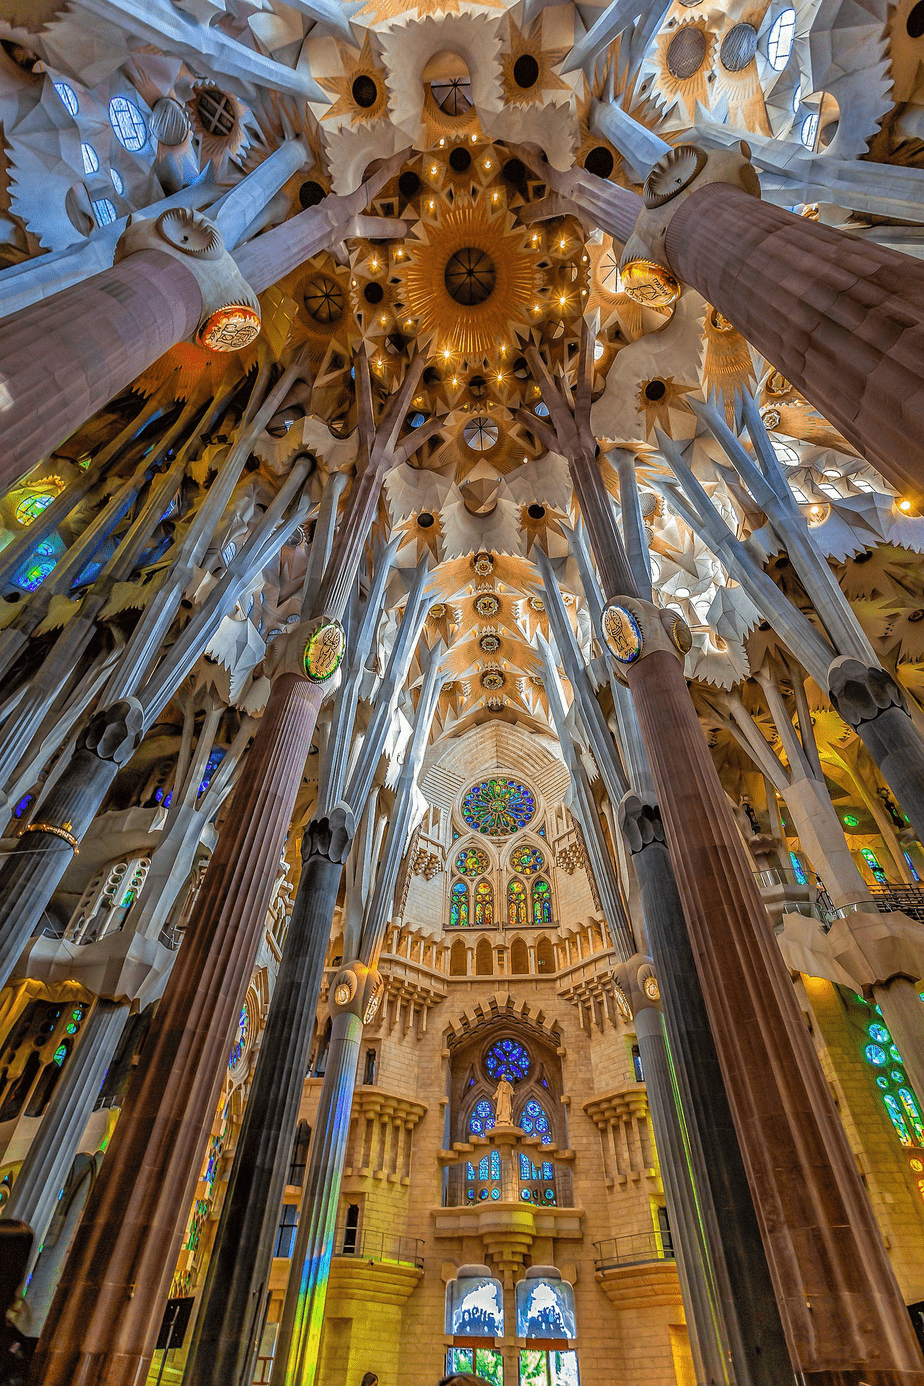 Sagrada Familia by Gaudi - Basilica in Barcelona, Spain - 137 Year Project 55